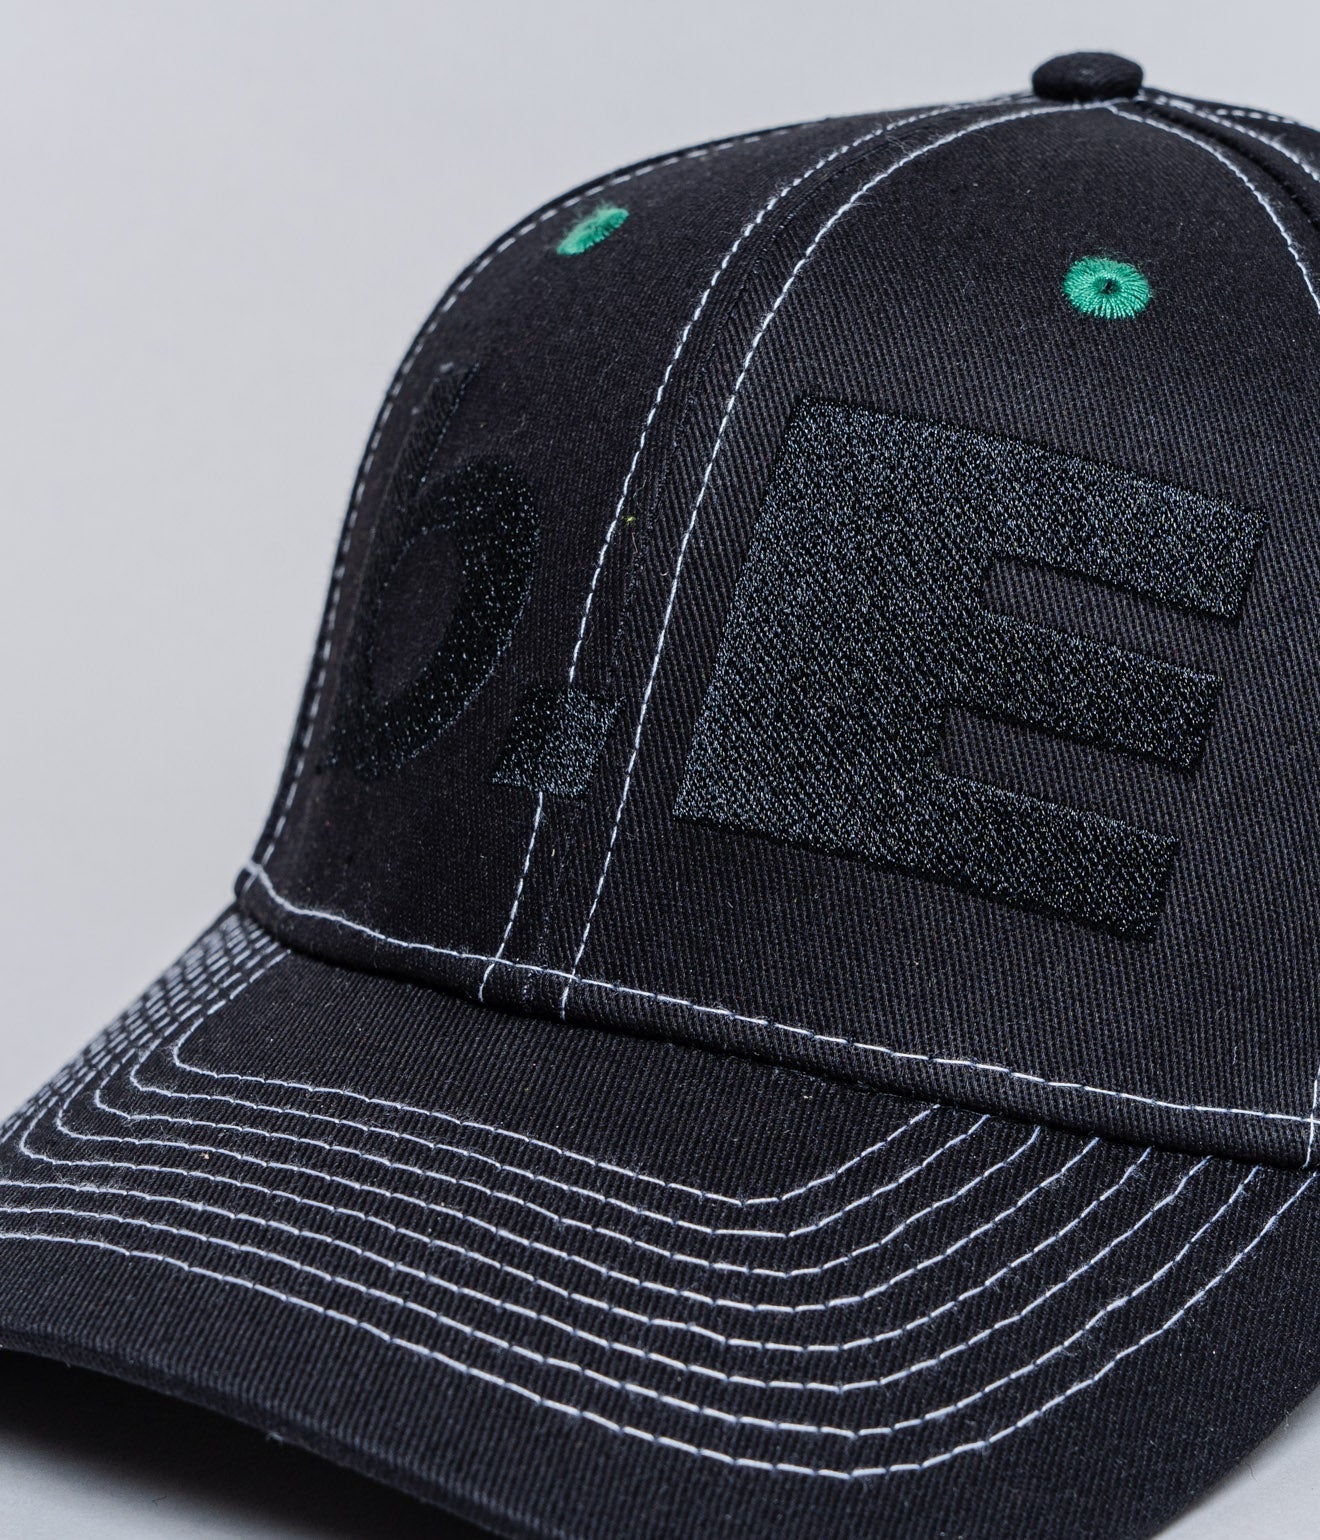 b.Eautiful "b.E Hat" Black / Black - WEAREALLANIMALS